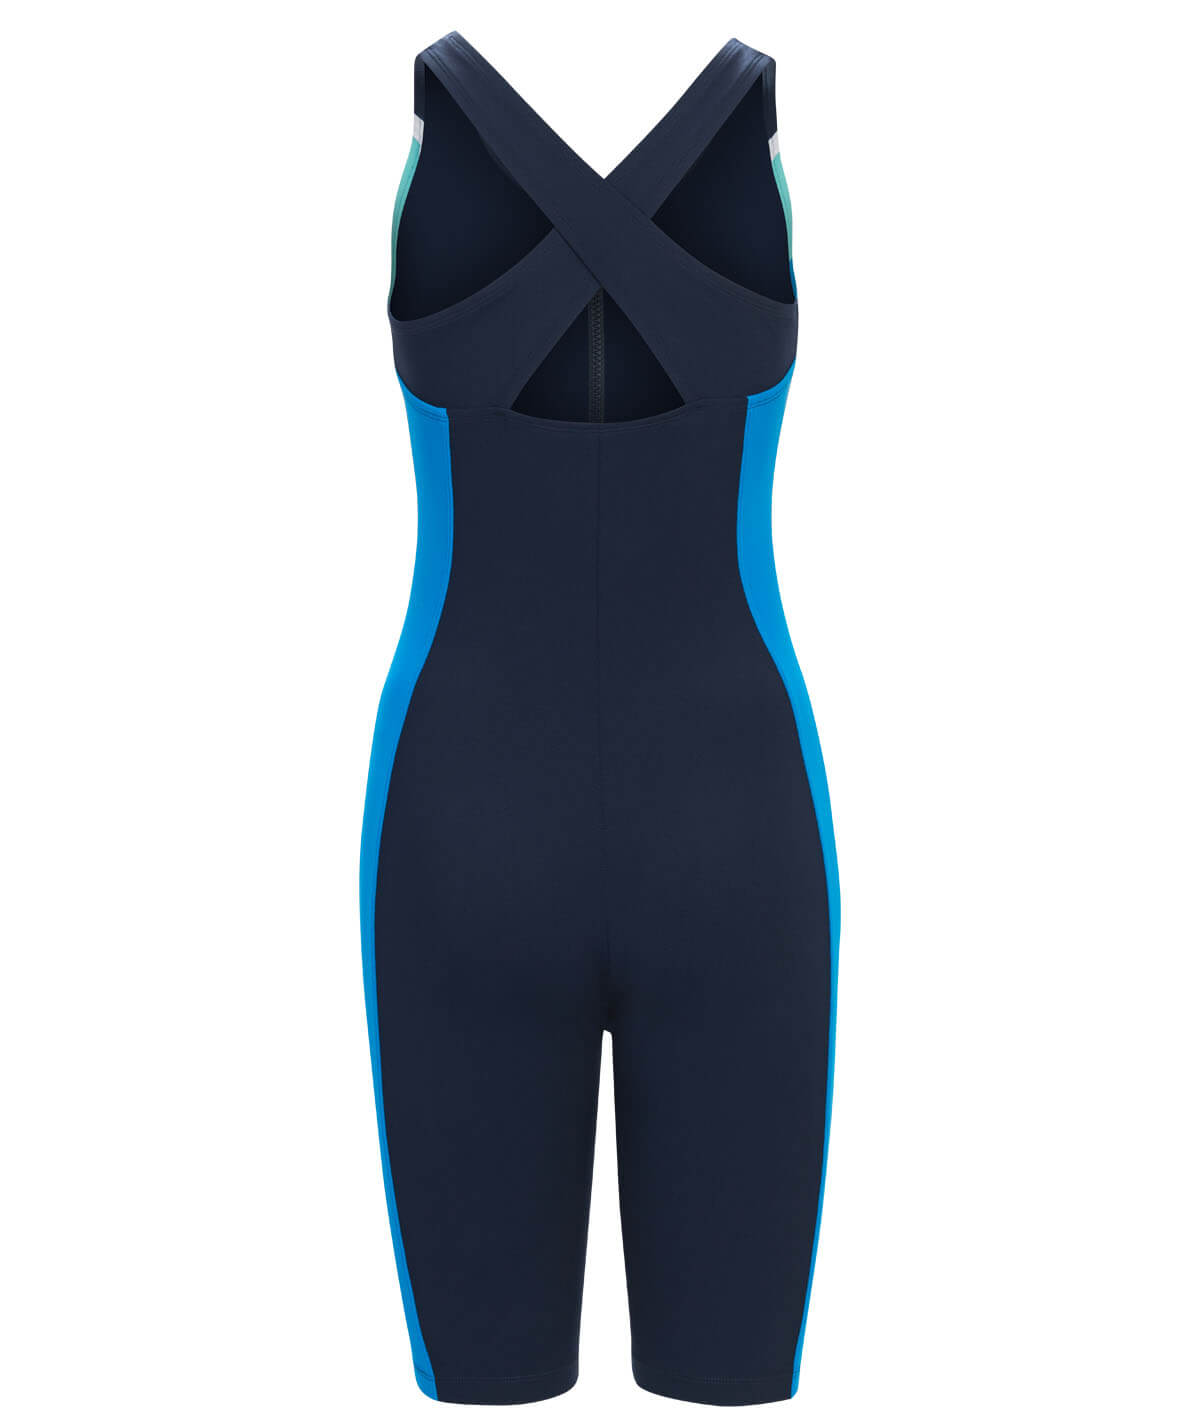 Aquashape Women's Zip-Front Color Block Aquatard Swimsuit